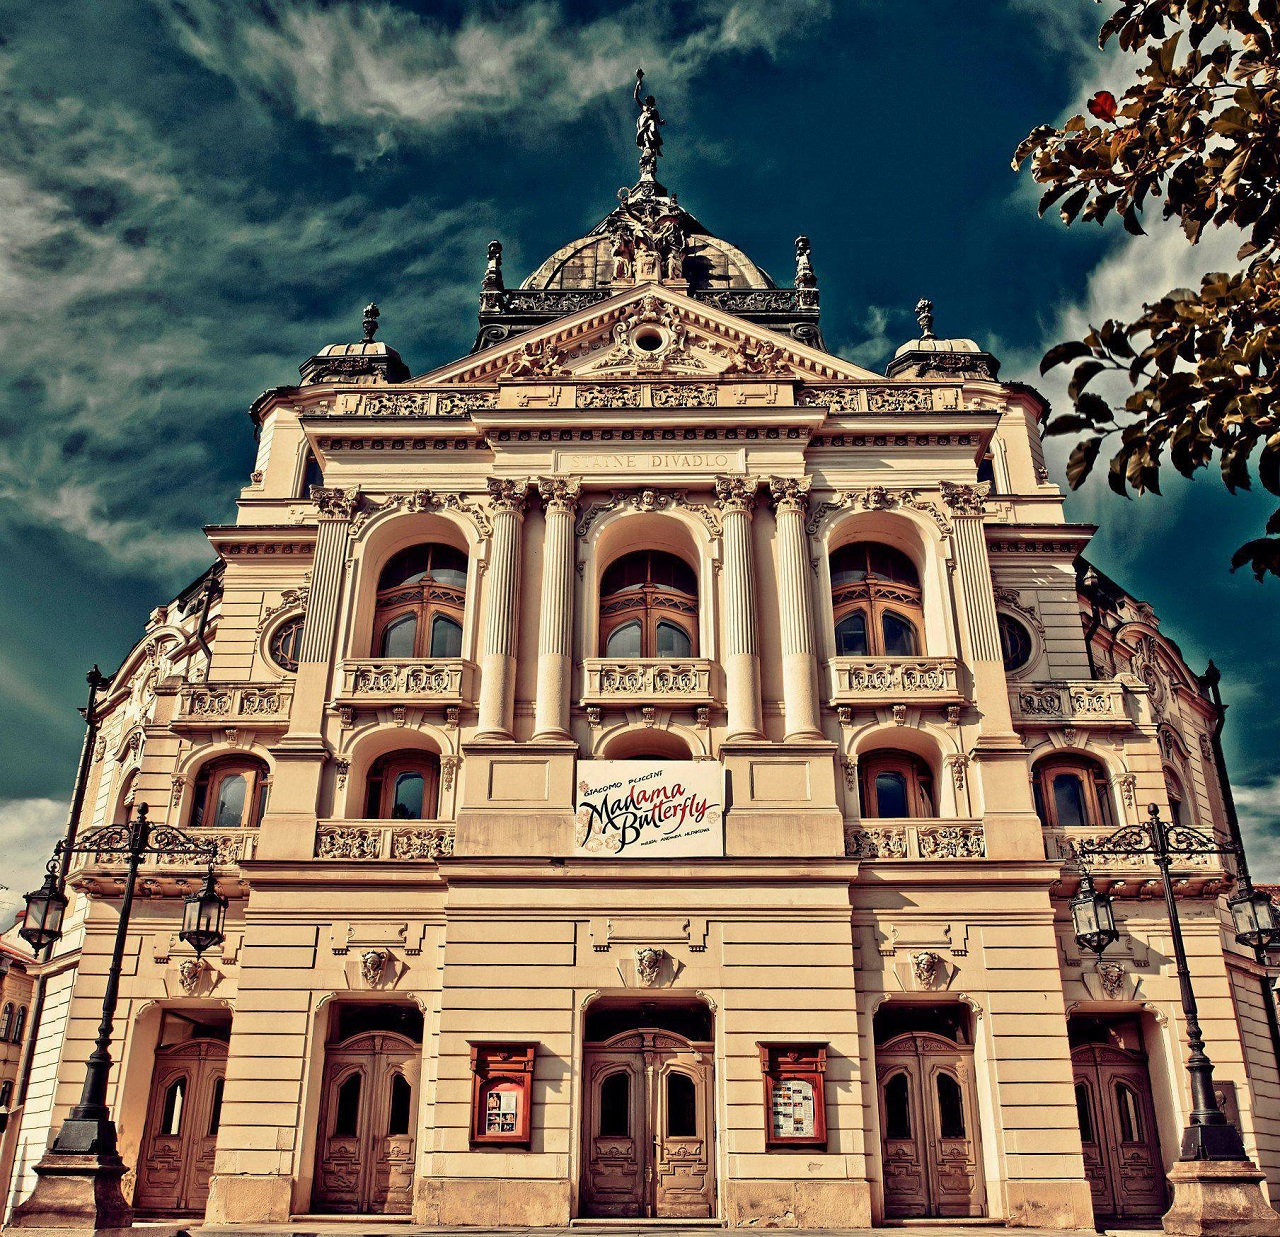 Štátne divadlo Košice mení názov na Národné divadlo Košice